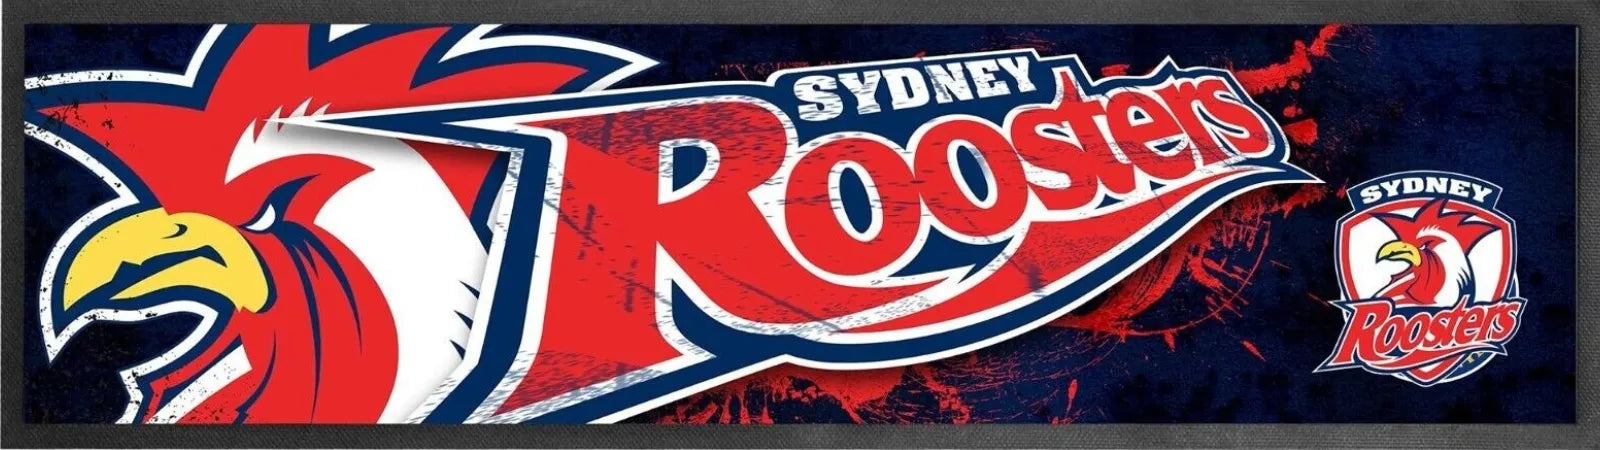 Sydney Roosters NRL Premium Rubber-Backed Bar Mat Runner